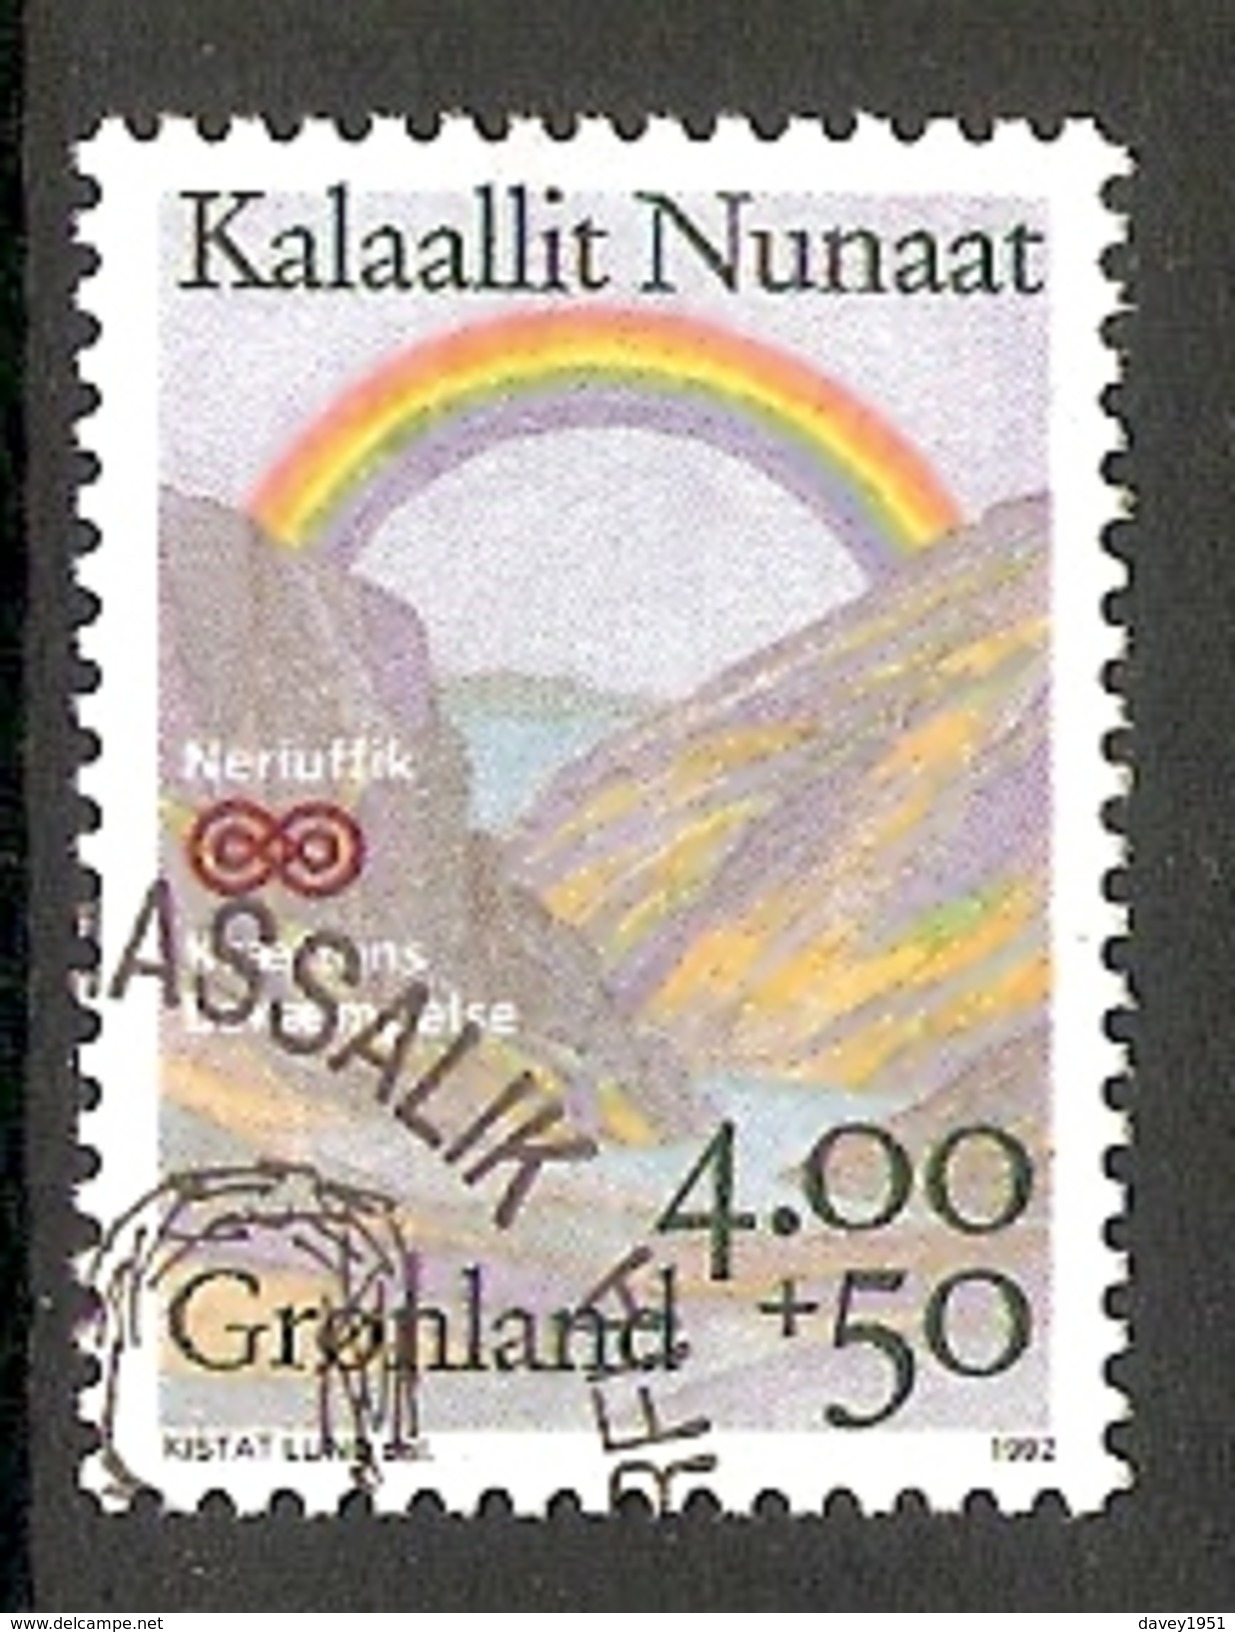 004129 Greenland 1992 Neriuffik 4K + 50o FU - Used Stamps